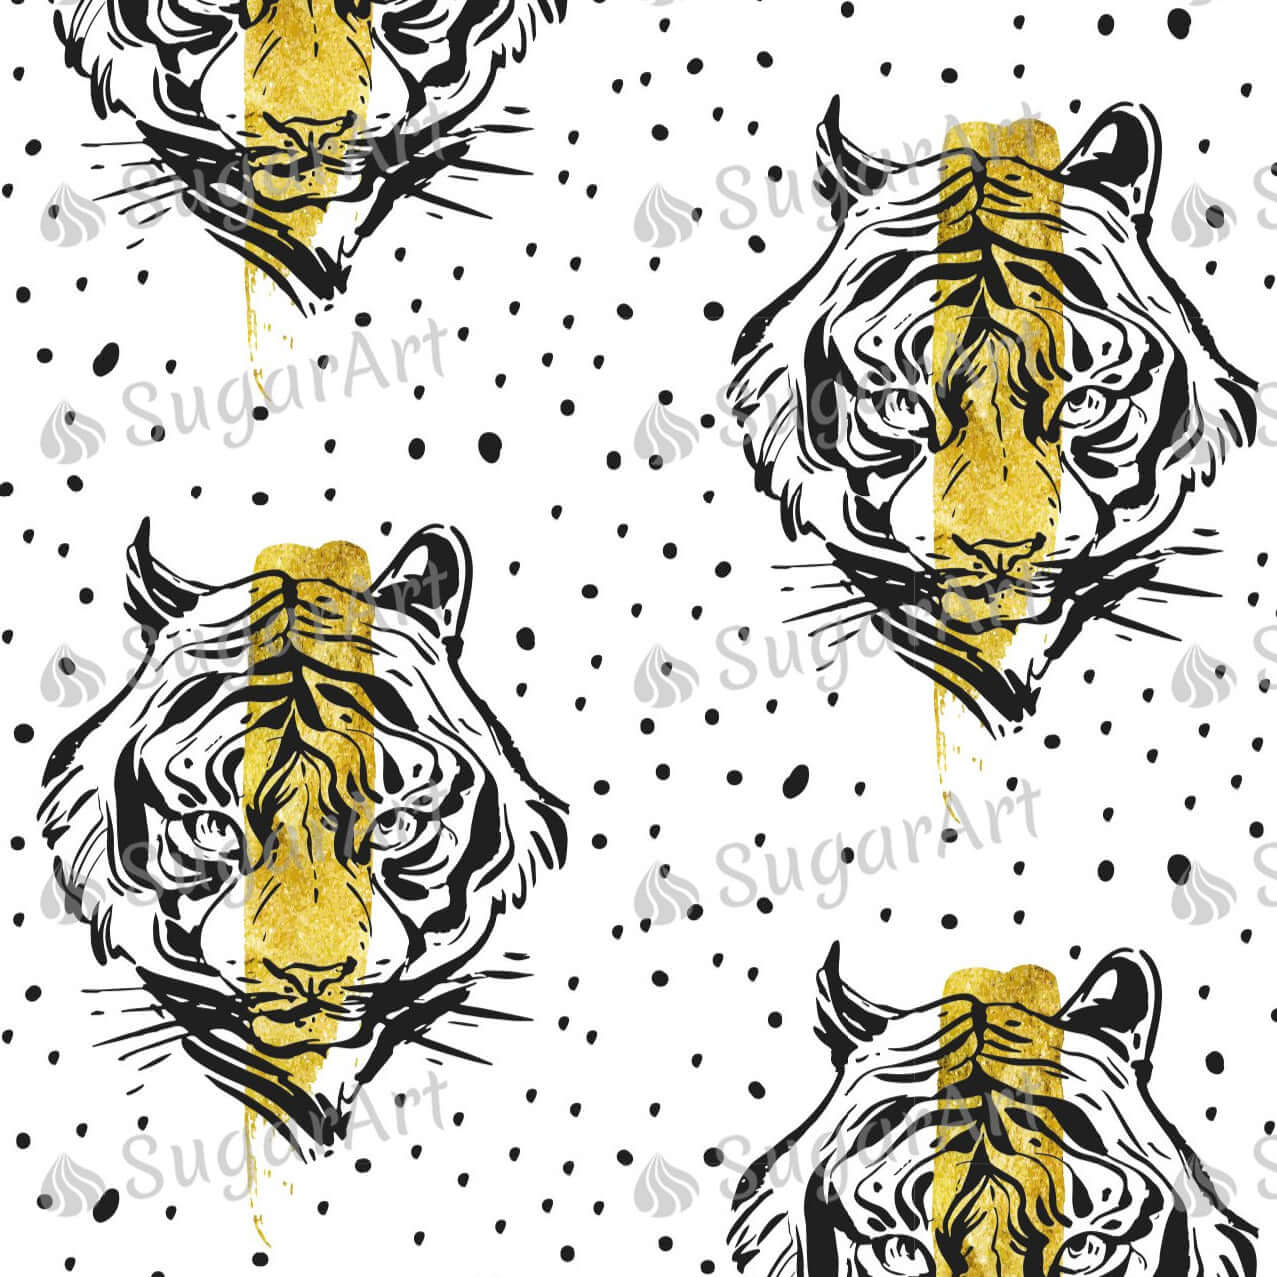 Creative Tiger Face Illustration - Icing - ISA214.